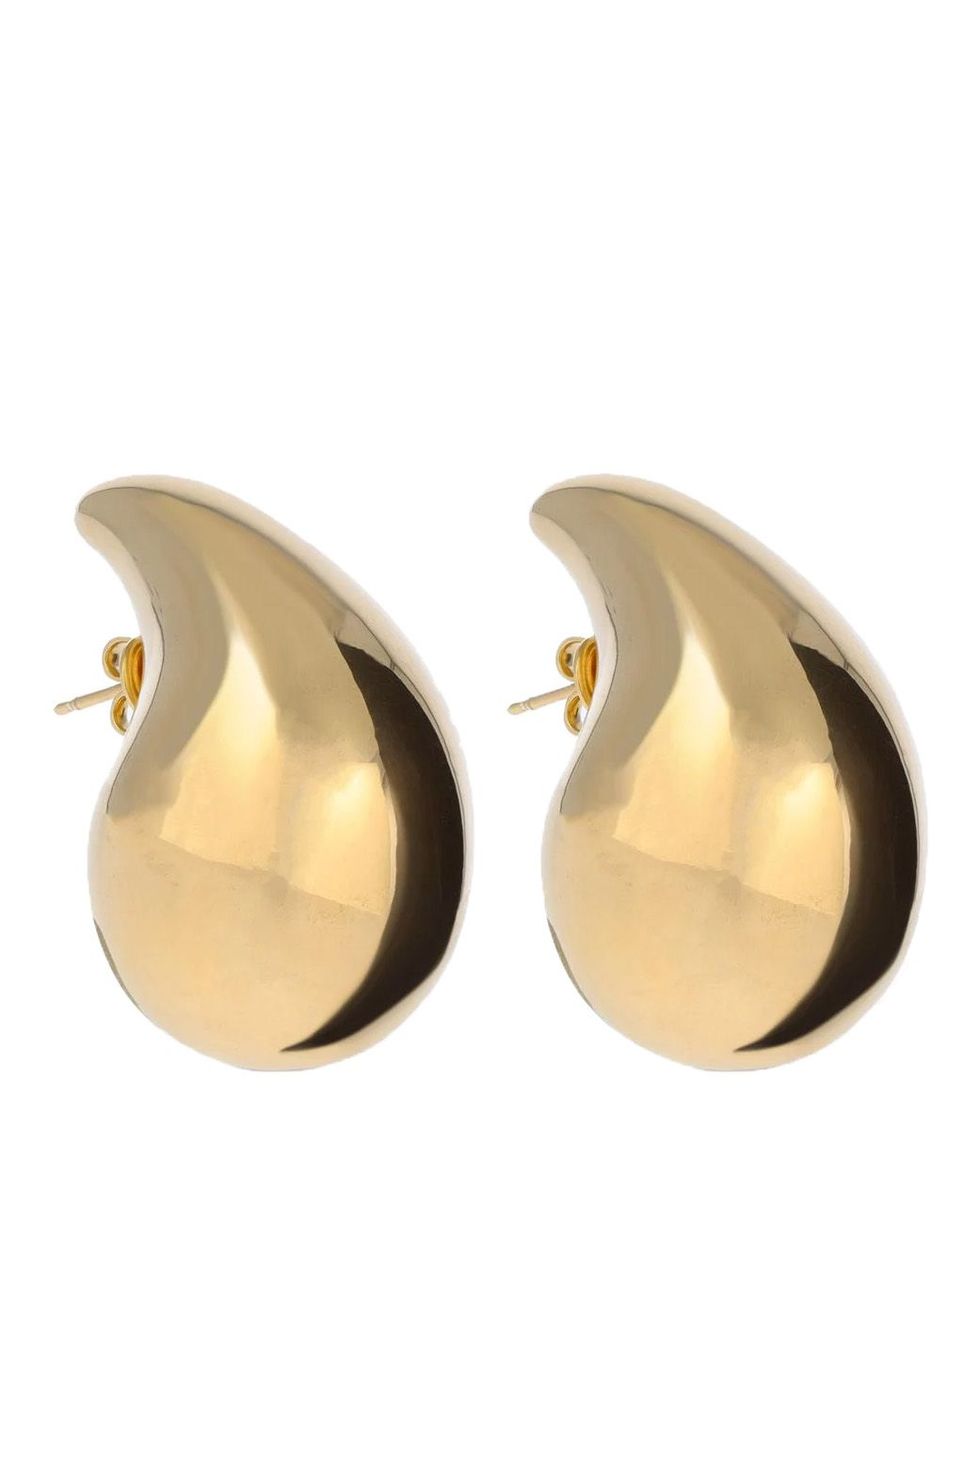 Bottega Veneta earrings 